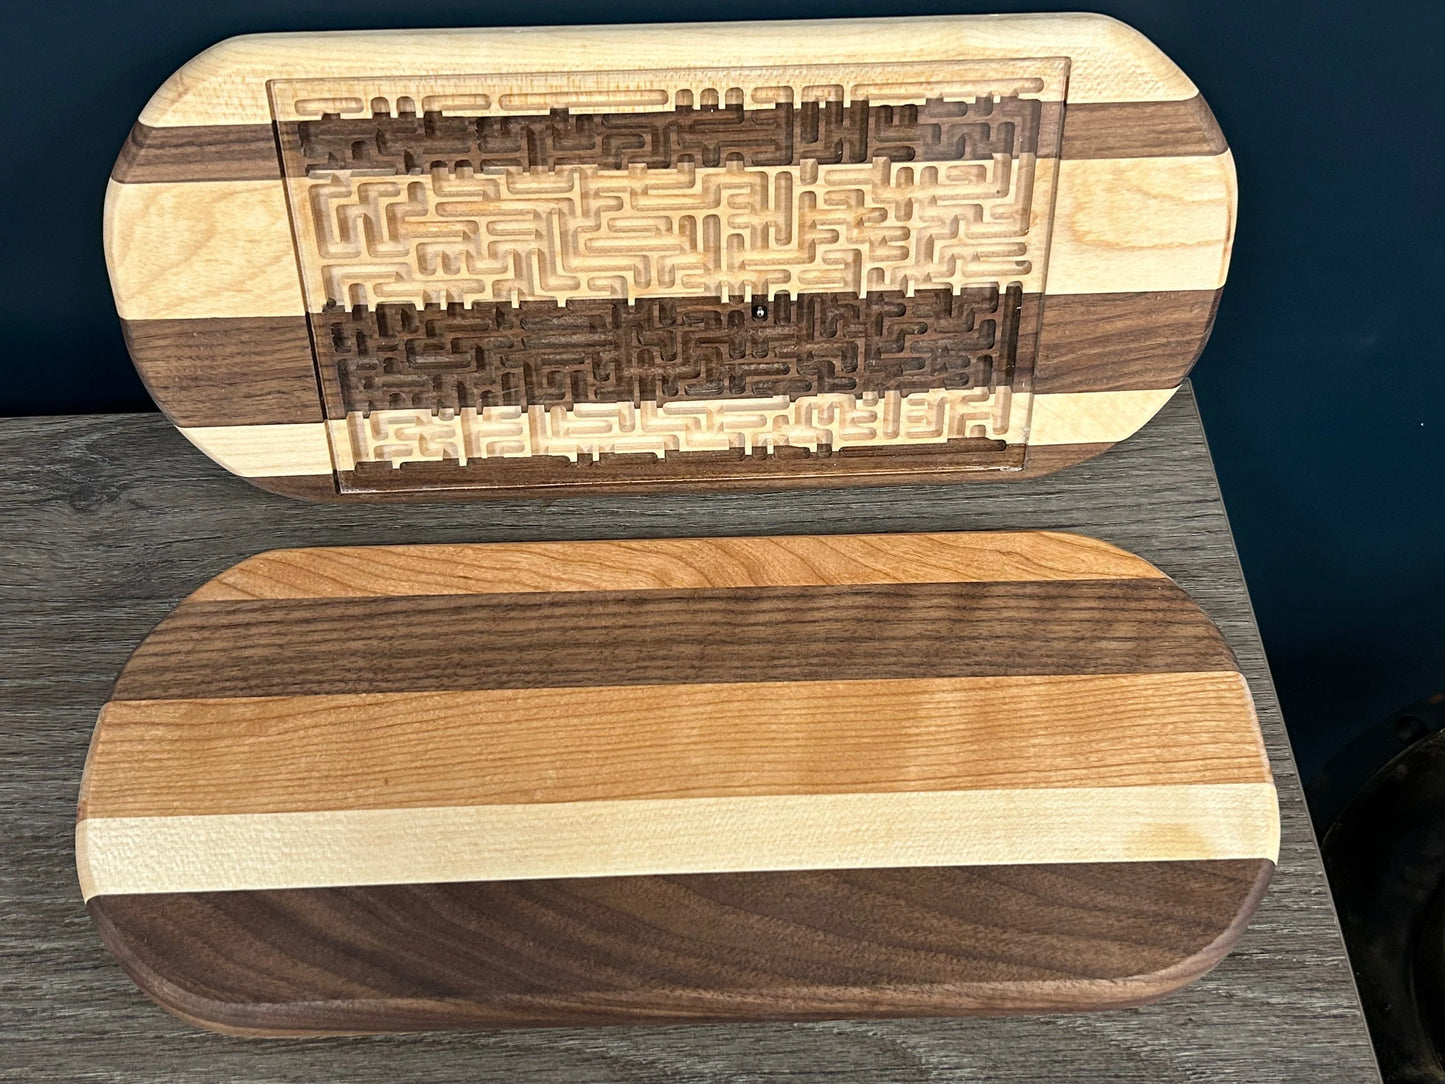 Maze Game - Wood